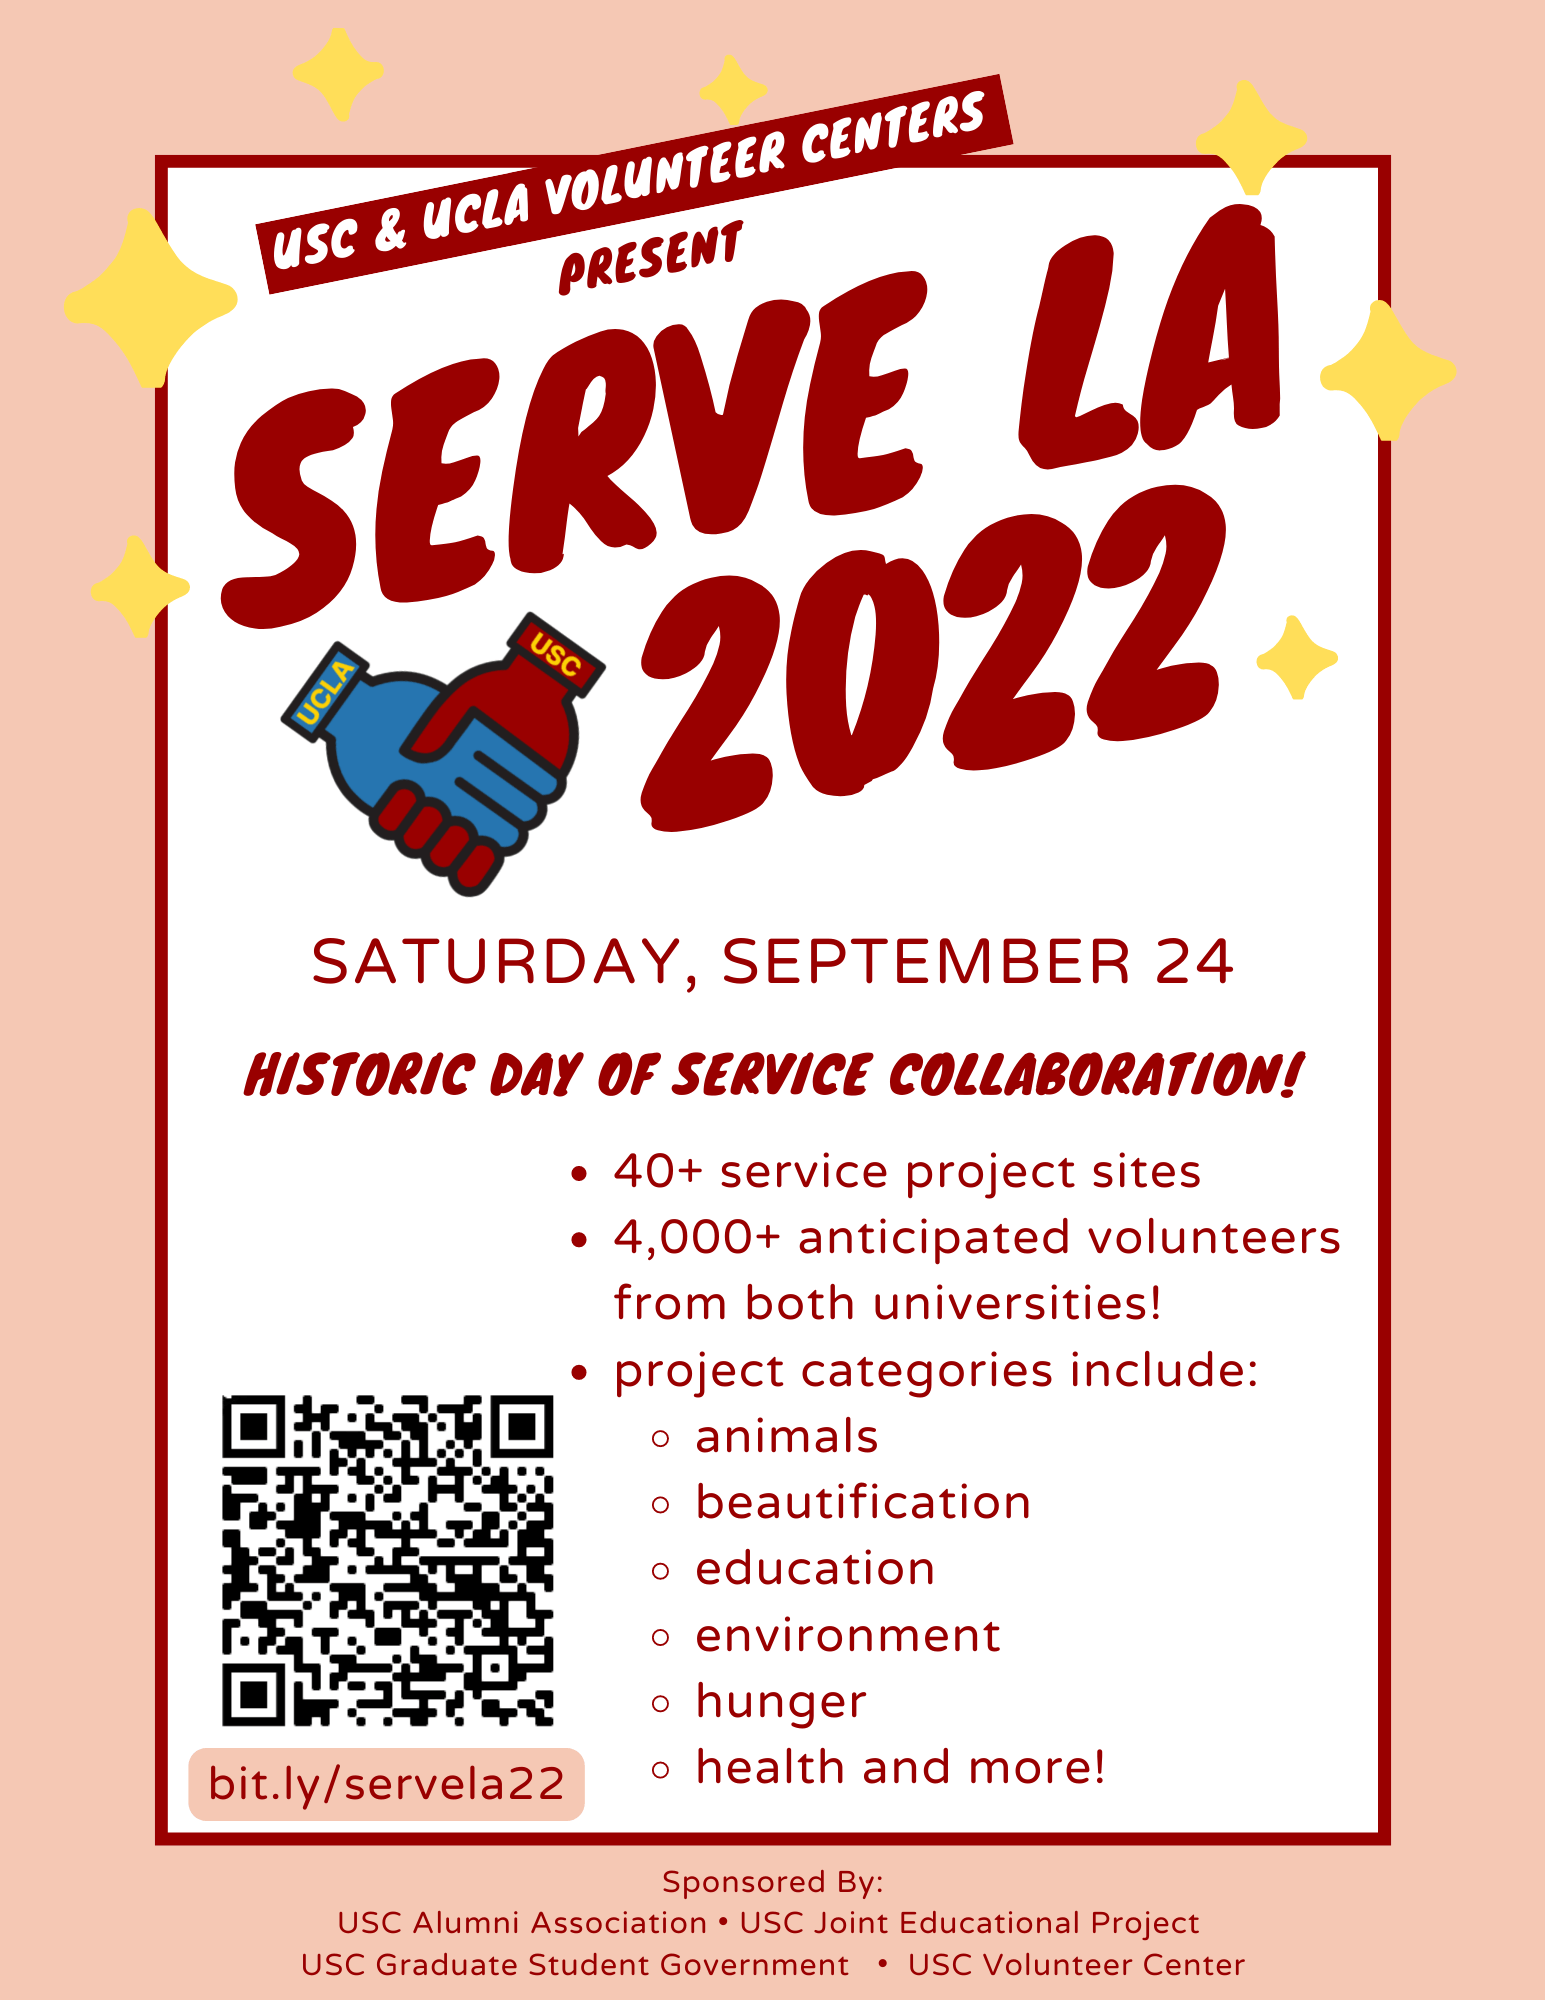 Featured image for “UCLA & USC SERVE LA 2022! Saturday, September 24”